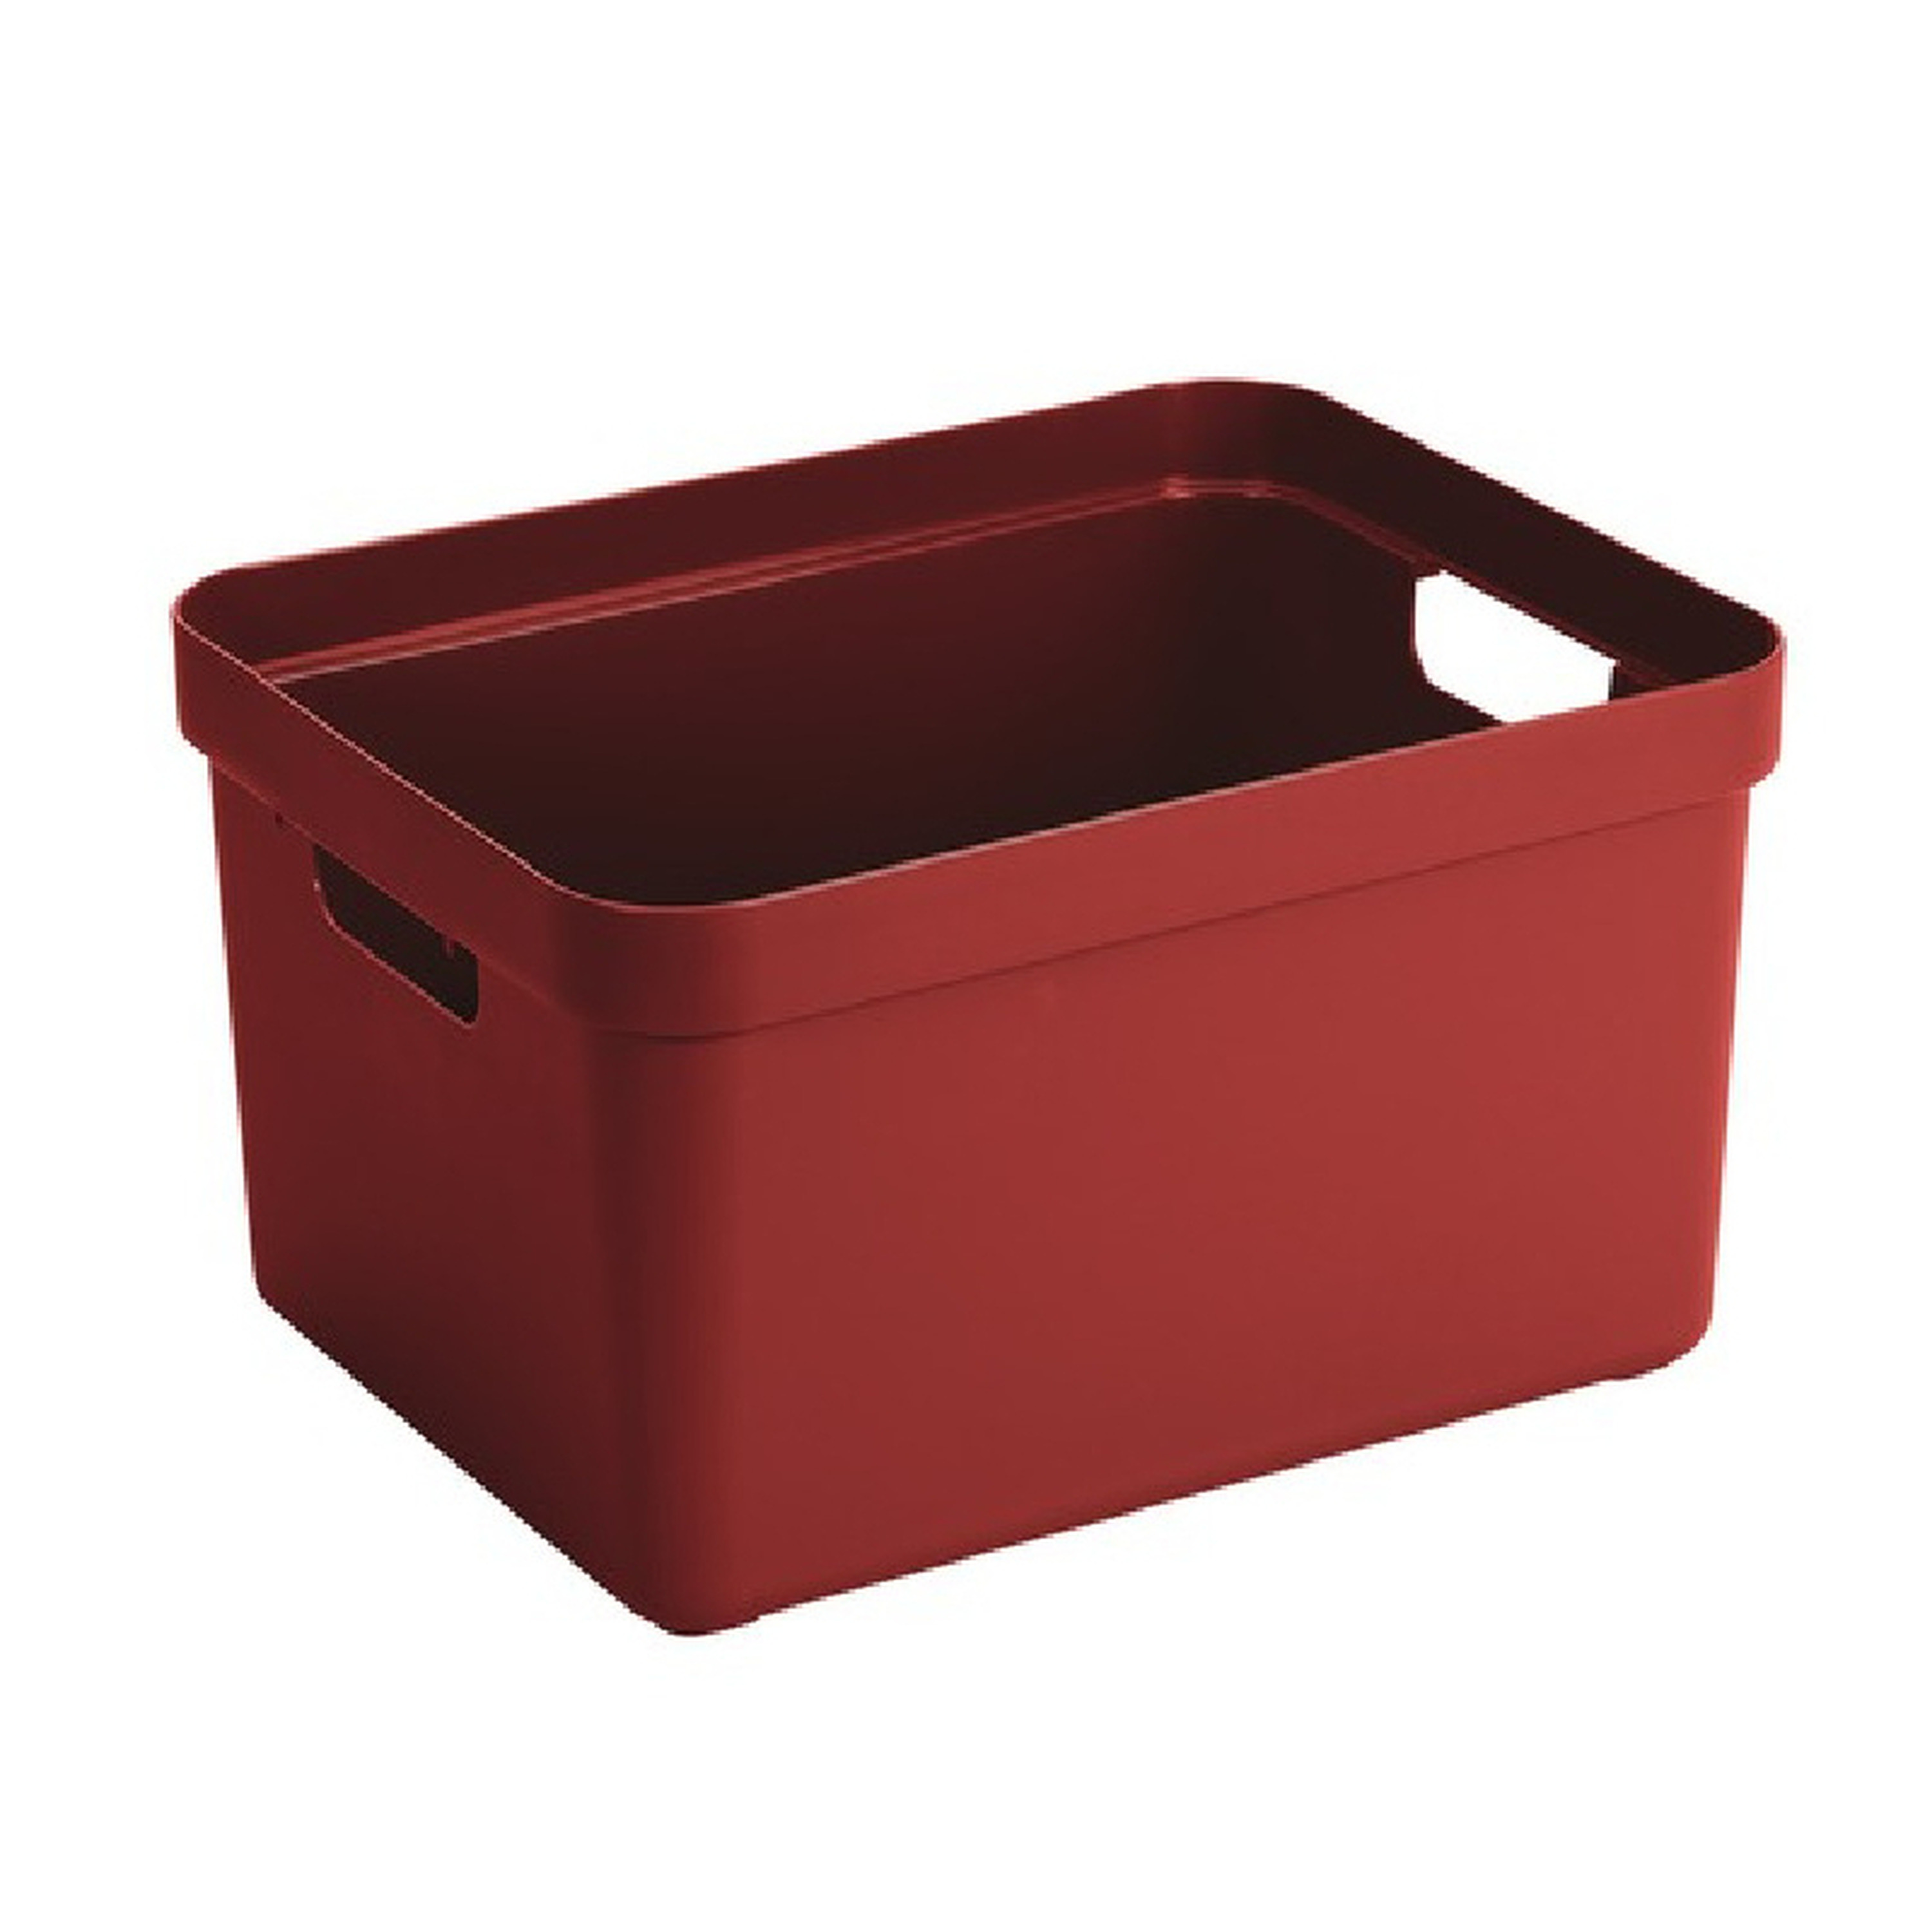 Grote rode opberg boxen/opbergdoos/manden 32 liter kunststof